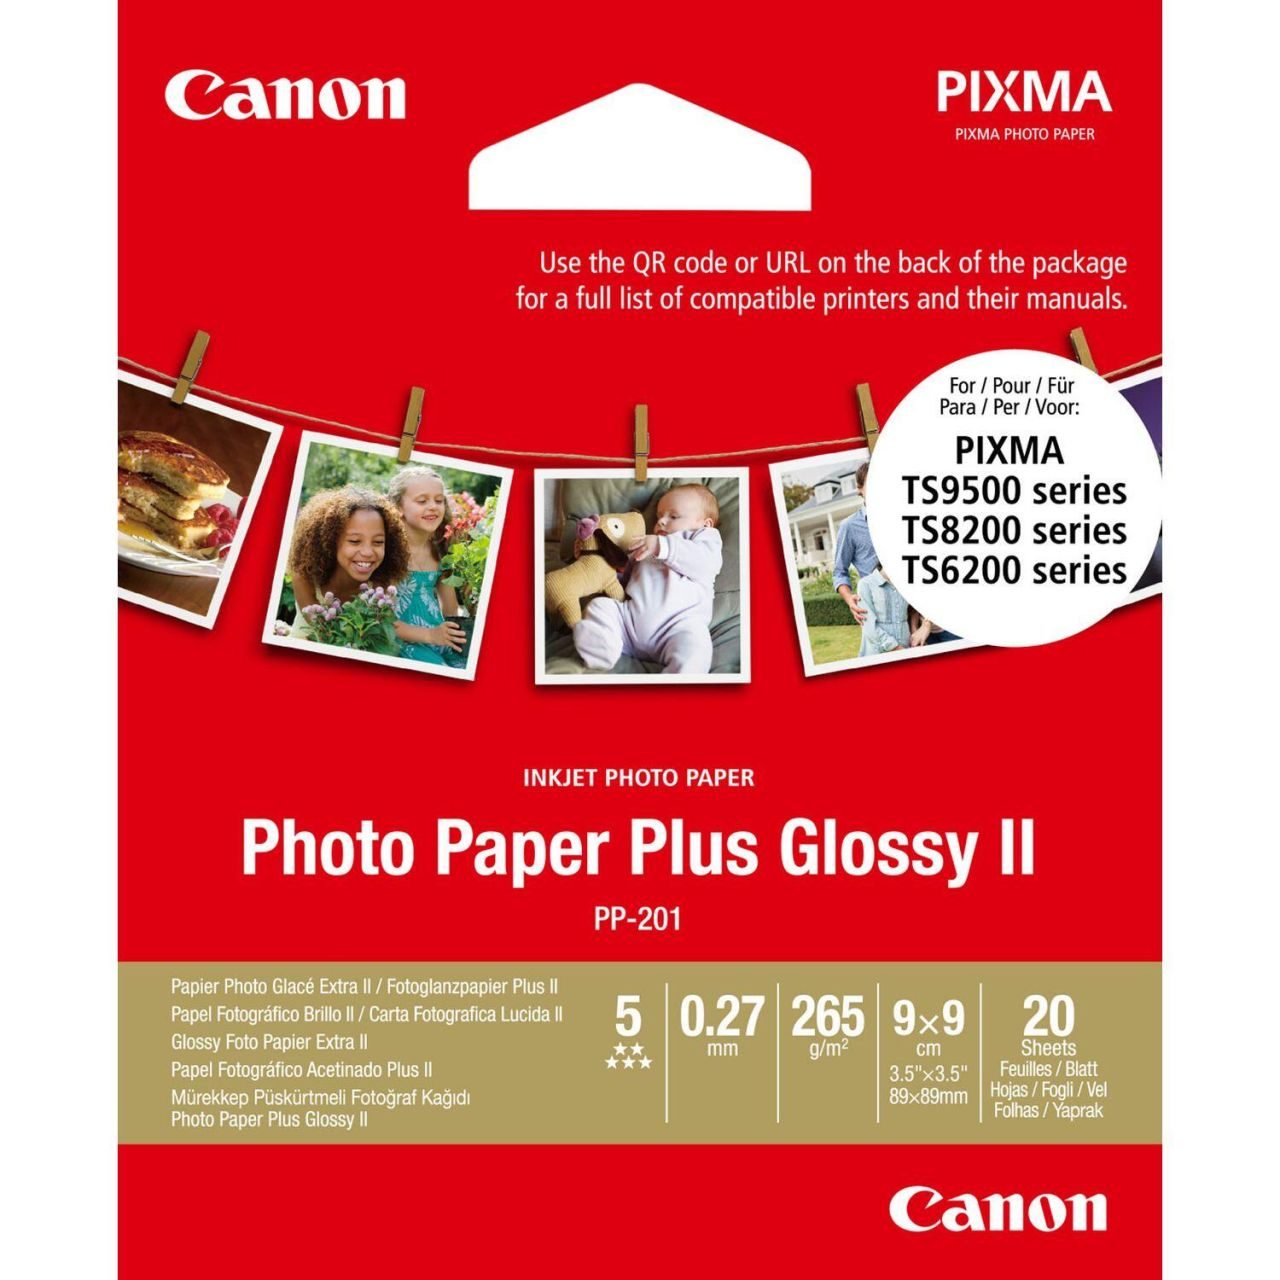 Canon PP-201 Glossy II Fotopapier Plus glänzend 89x89mm 265g/m² - 20 Blatt